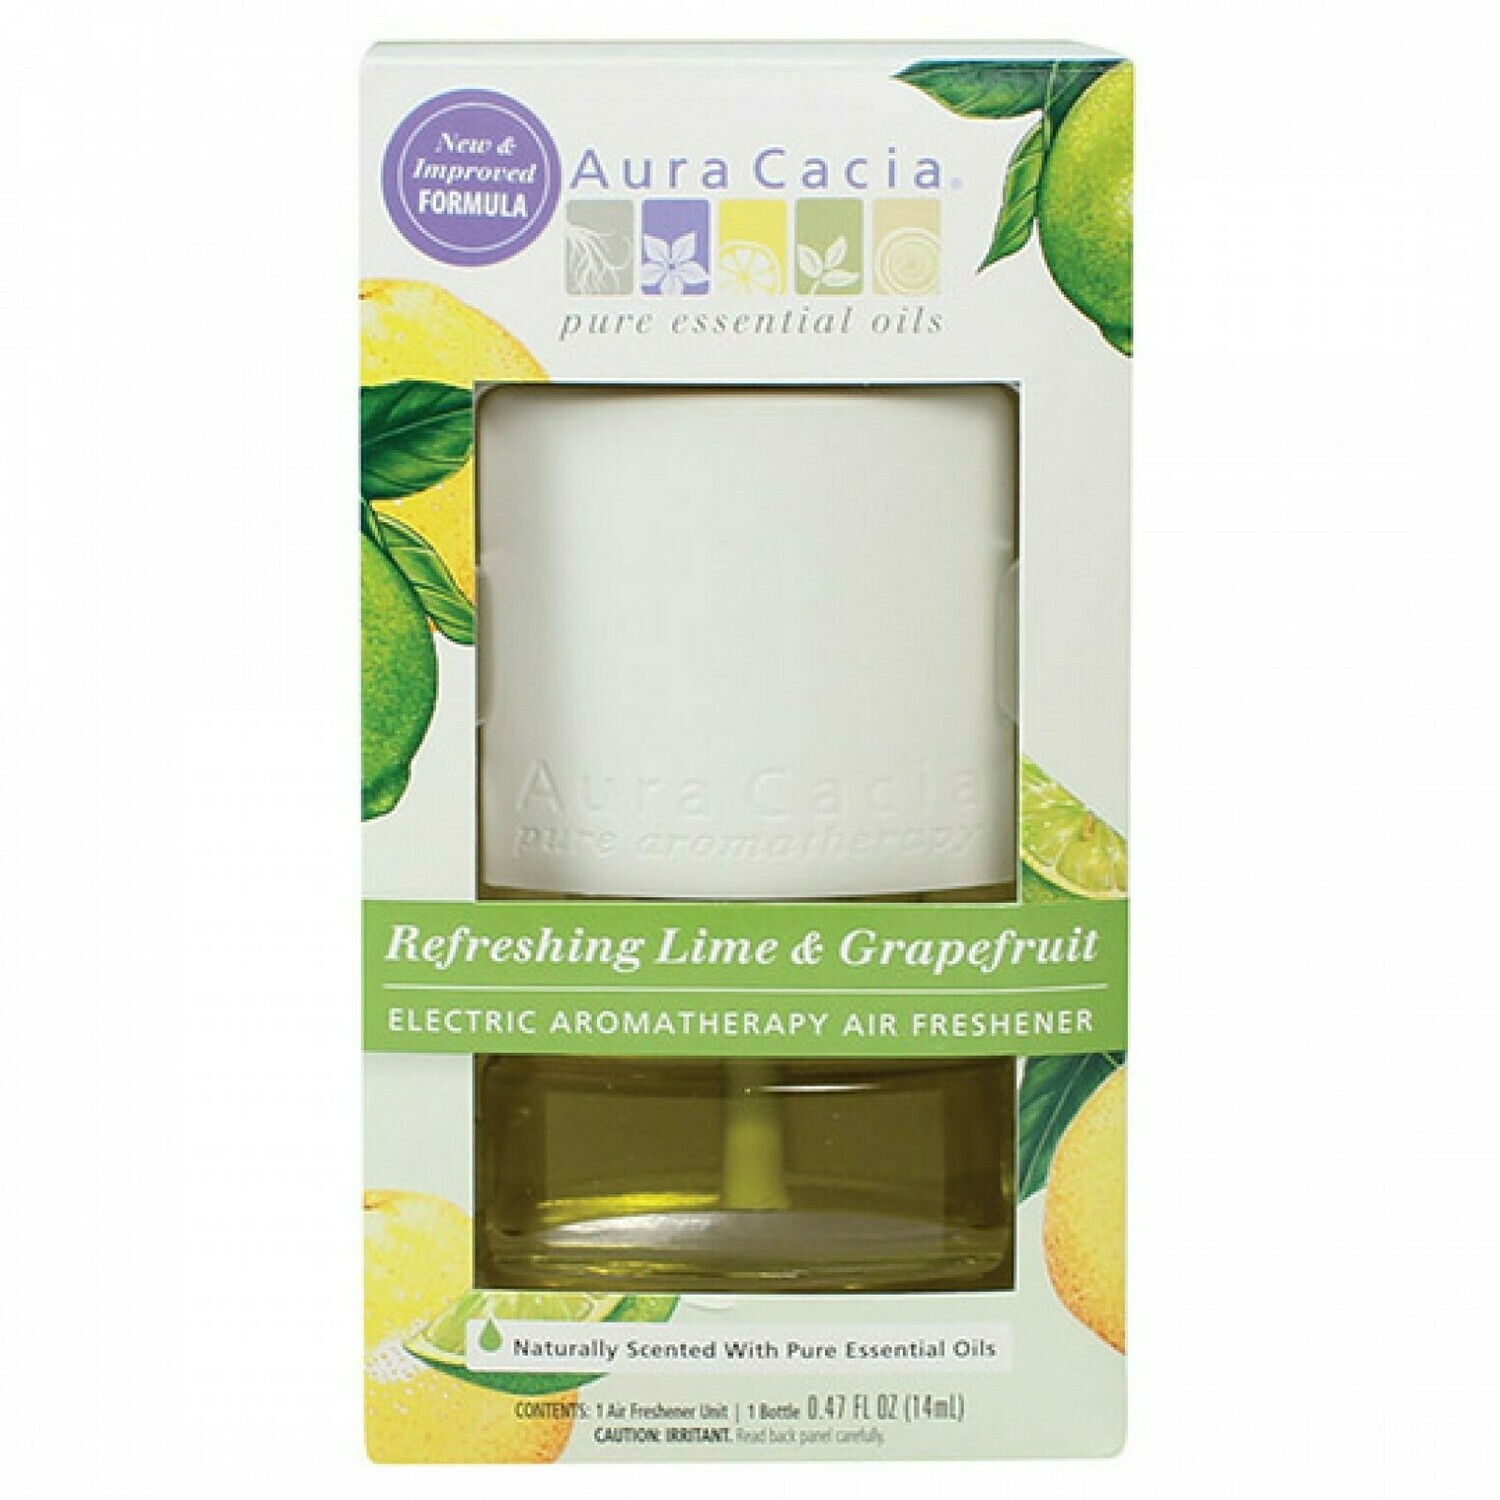 SALE: Aura Cacia Electric Diffuser Lime & Grapefruit - org. $14.99